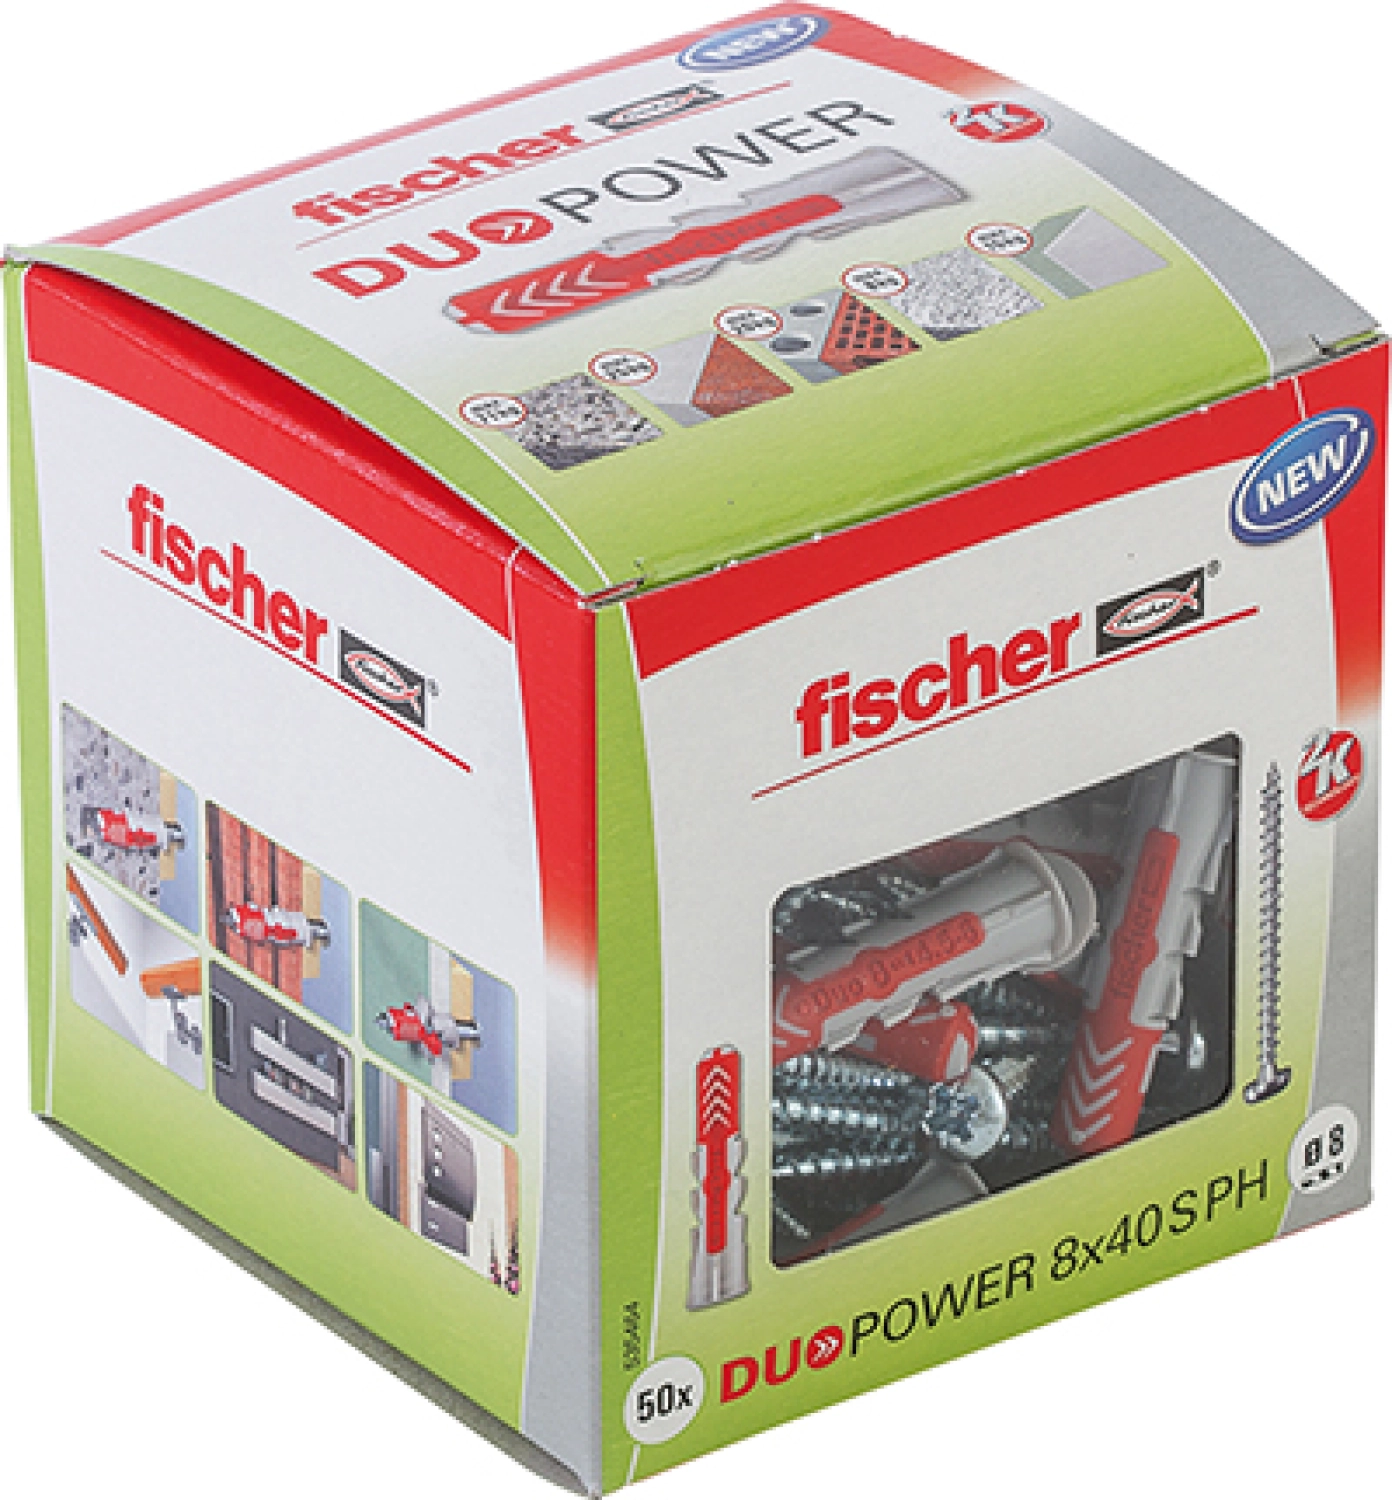 fischer 535464 - Cheville bi-matière DuoPower 8 x 40 PH avec vis (50pcs) DuoPower 8 x 40 S PH-image